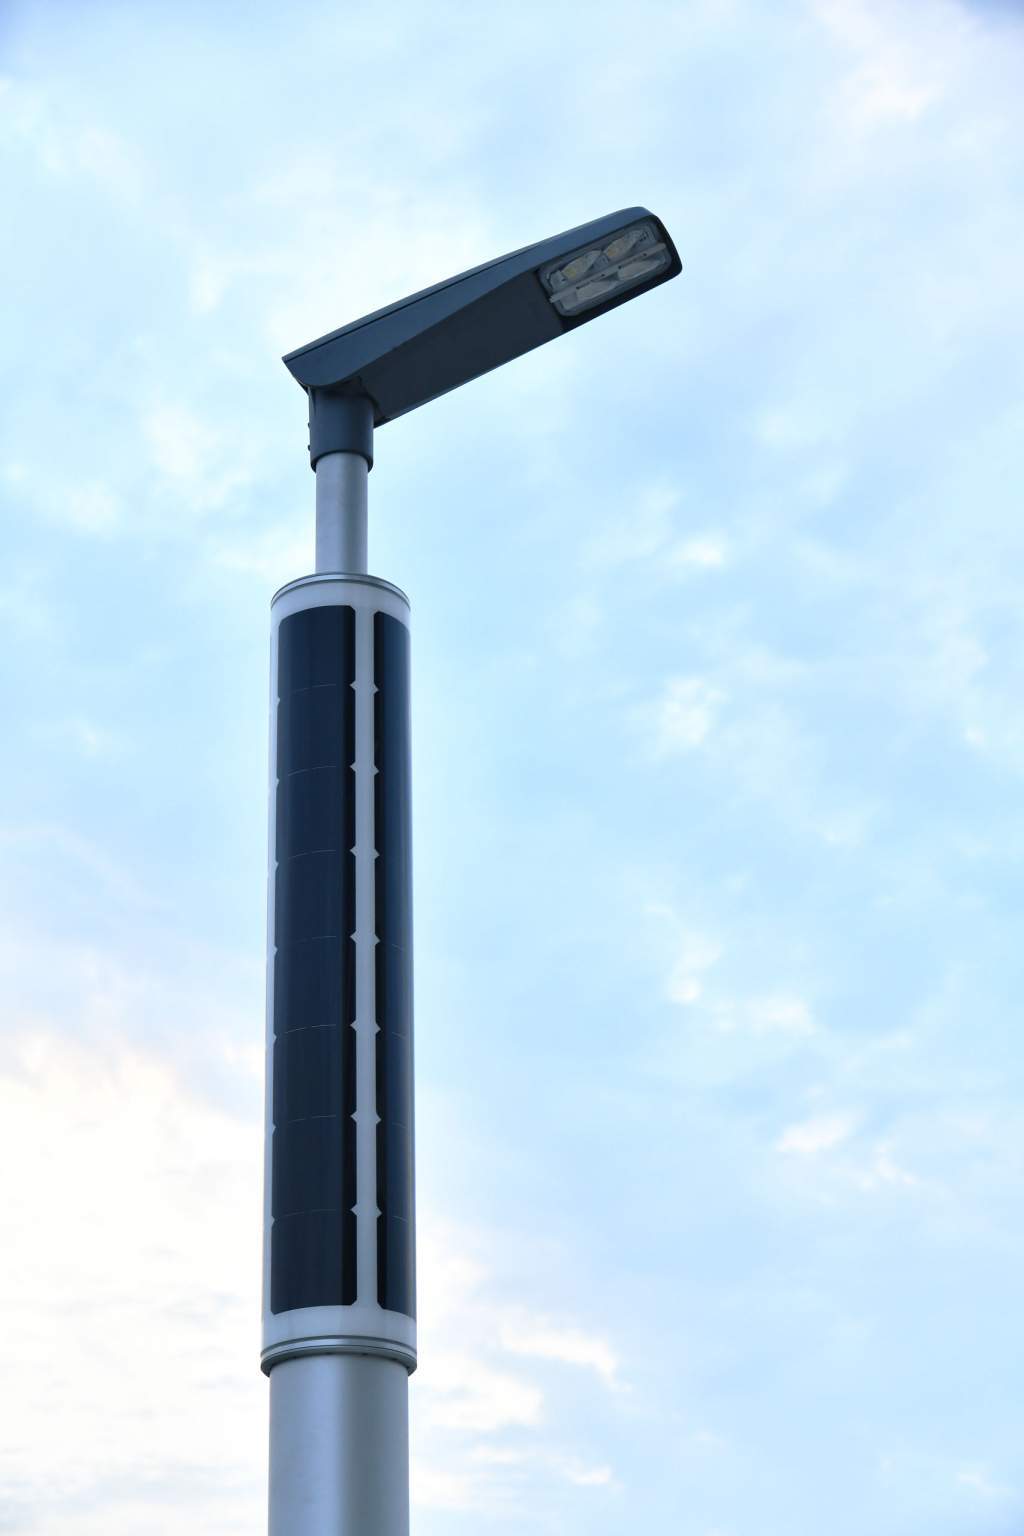 Soluxio solar light pole with blue sky